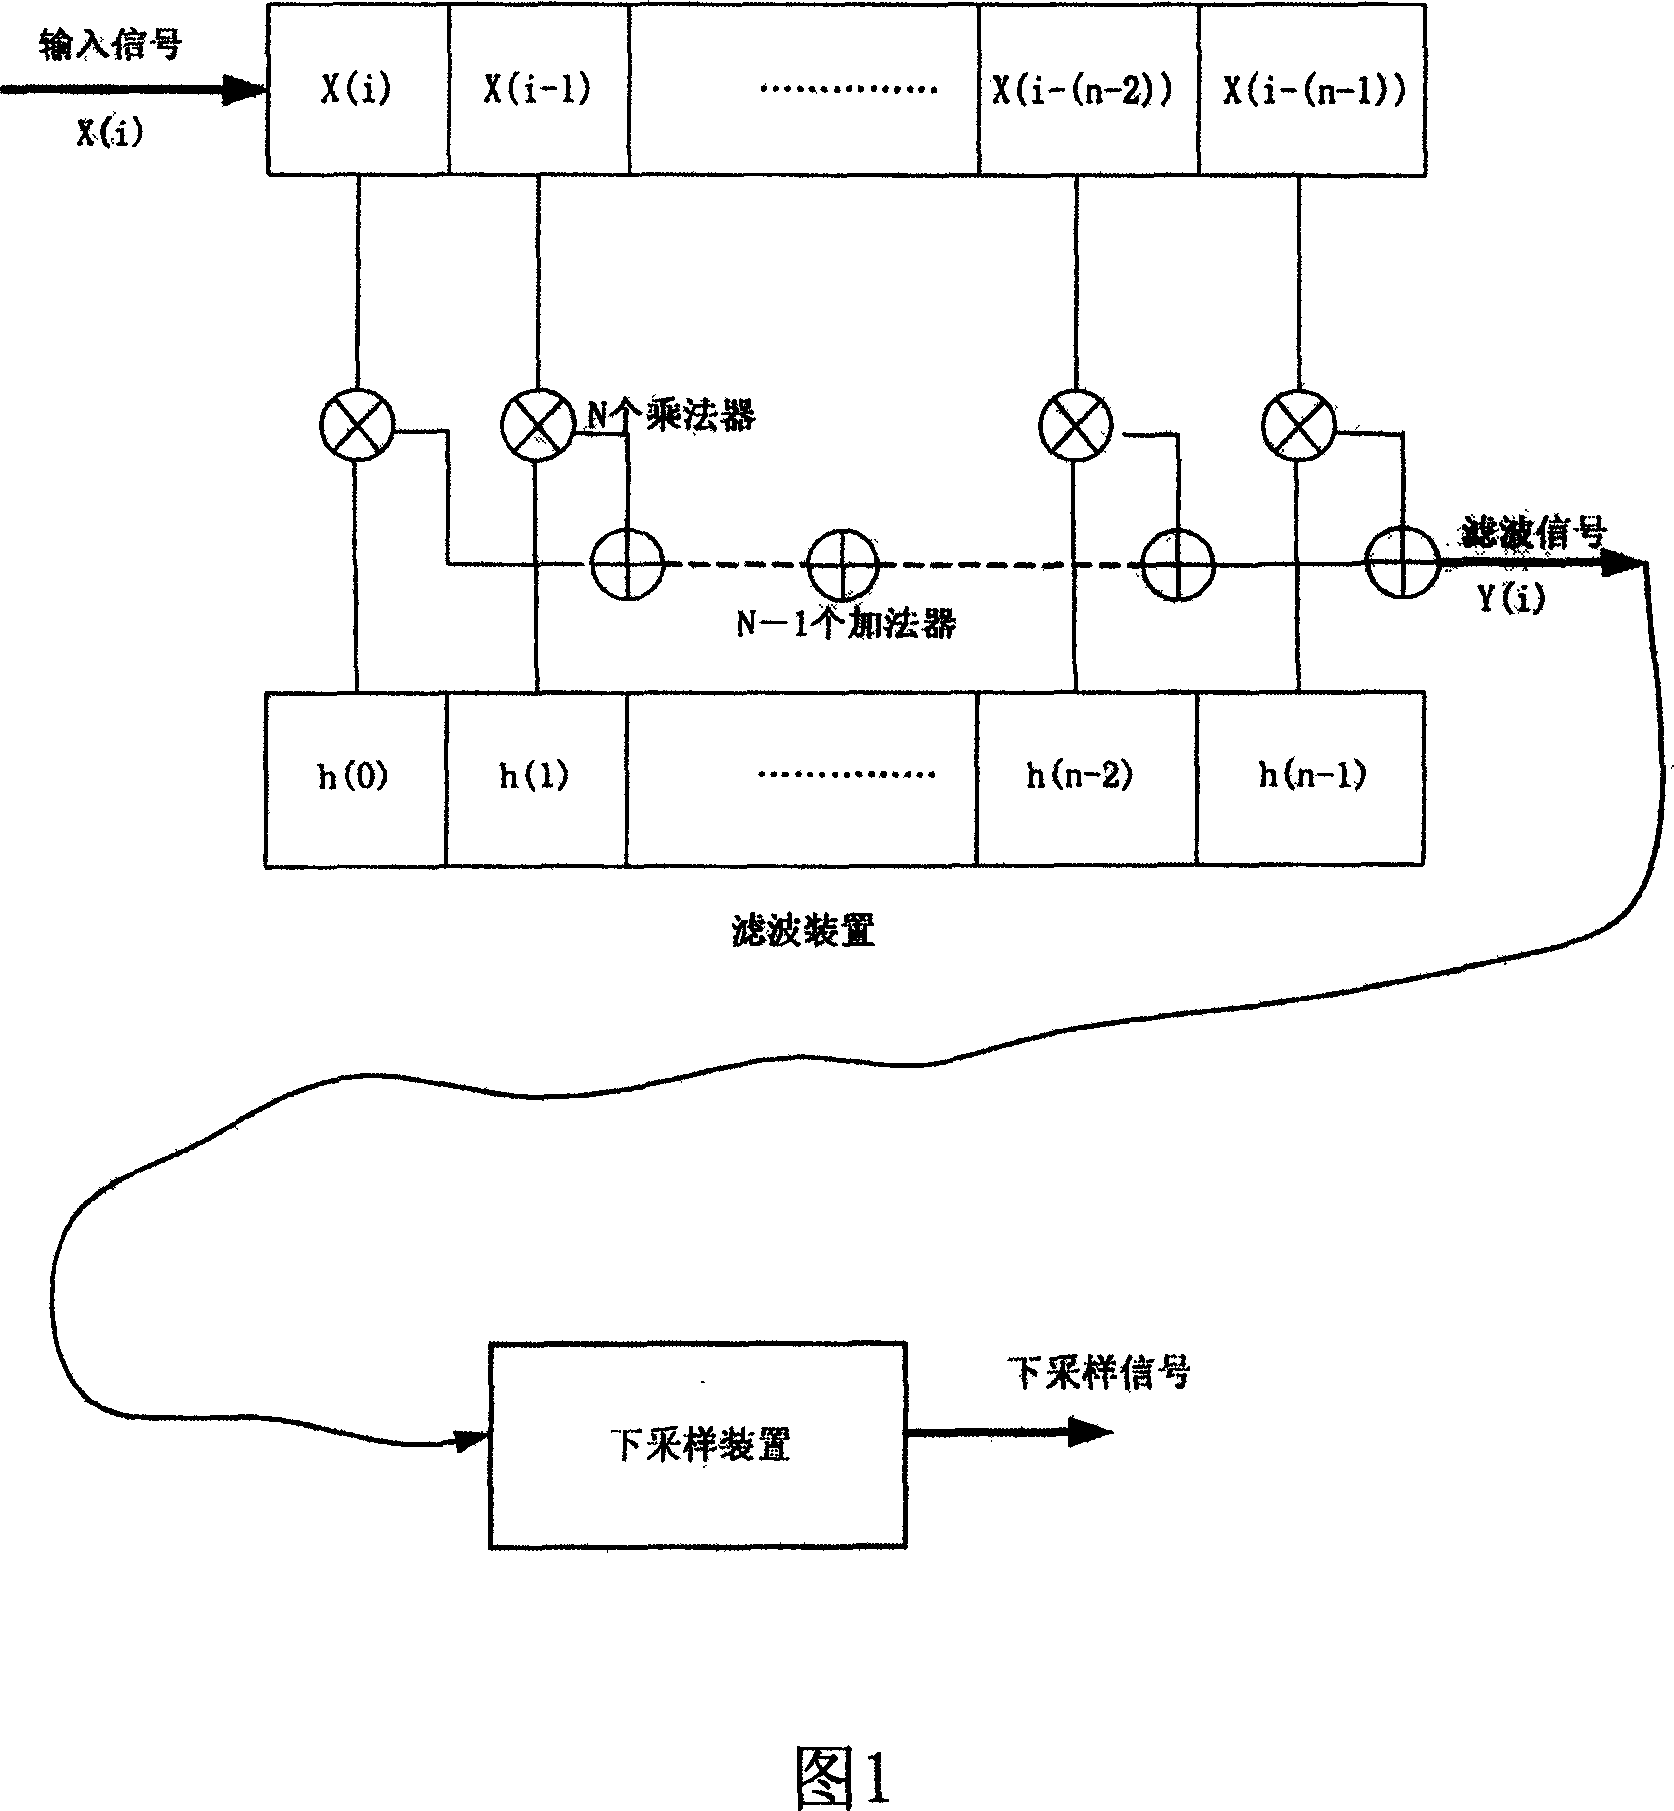 Digital signal filtering apparatus and method having down sampling function